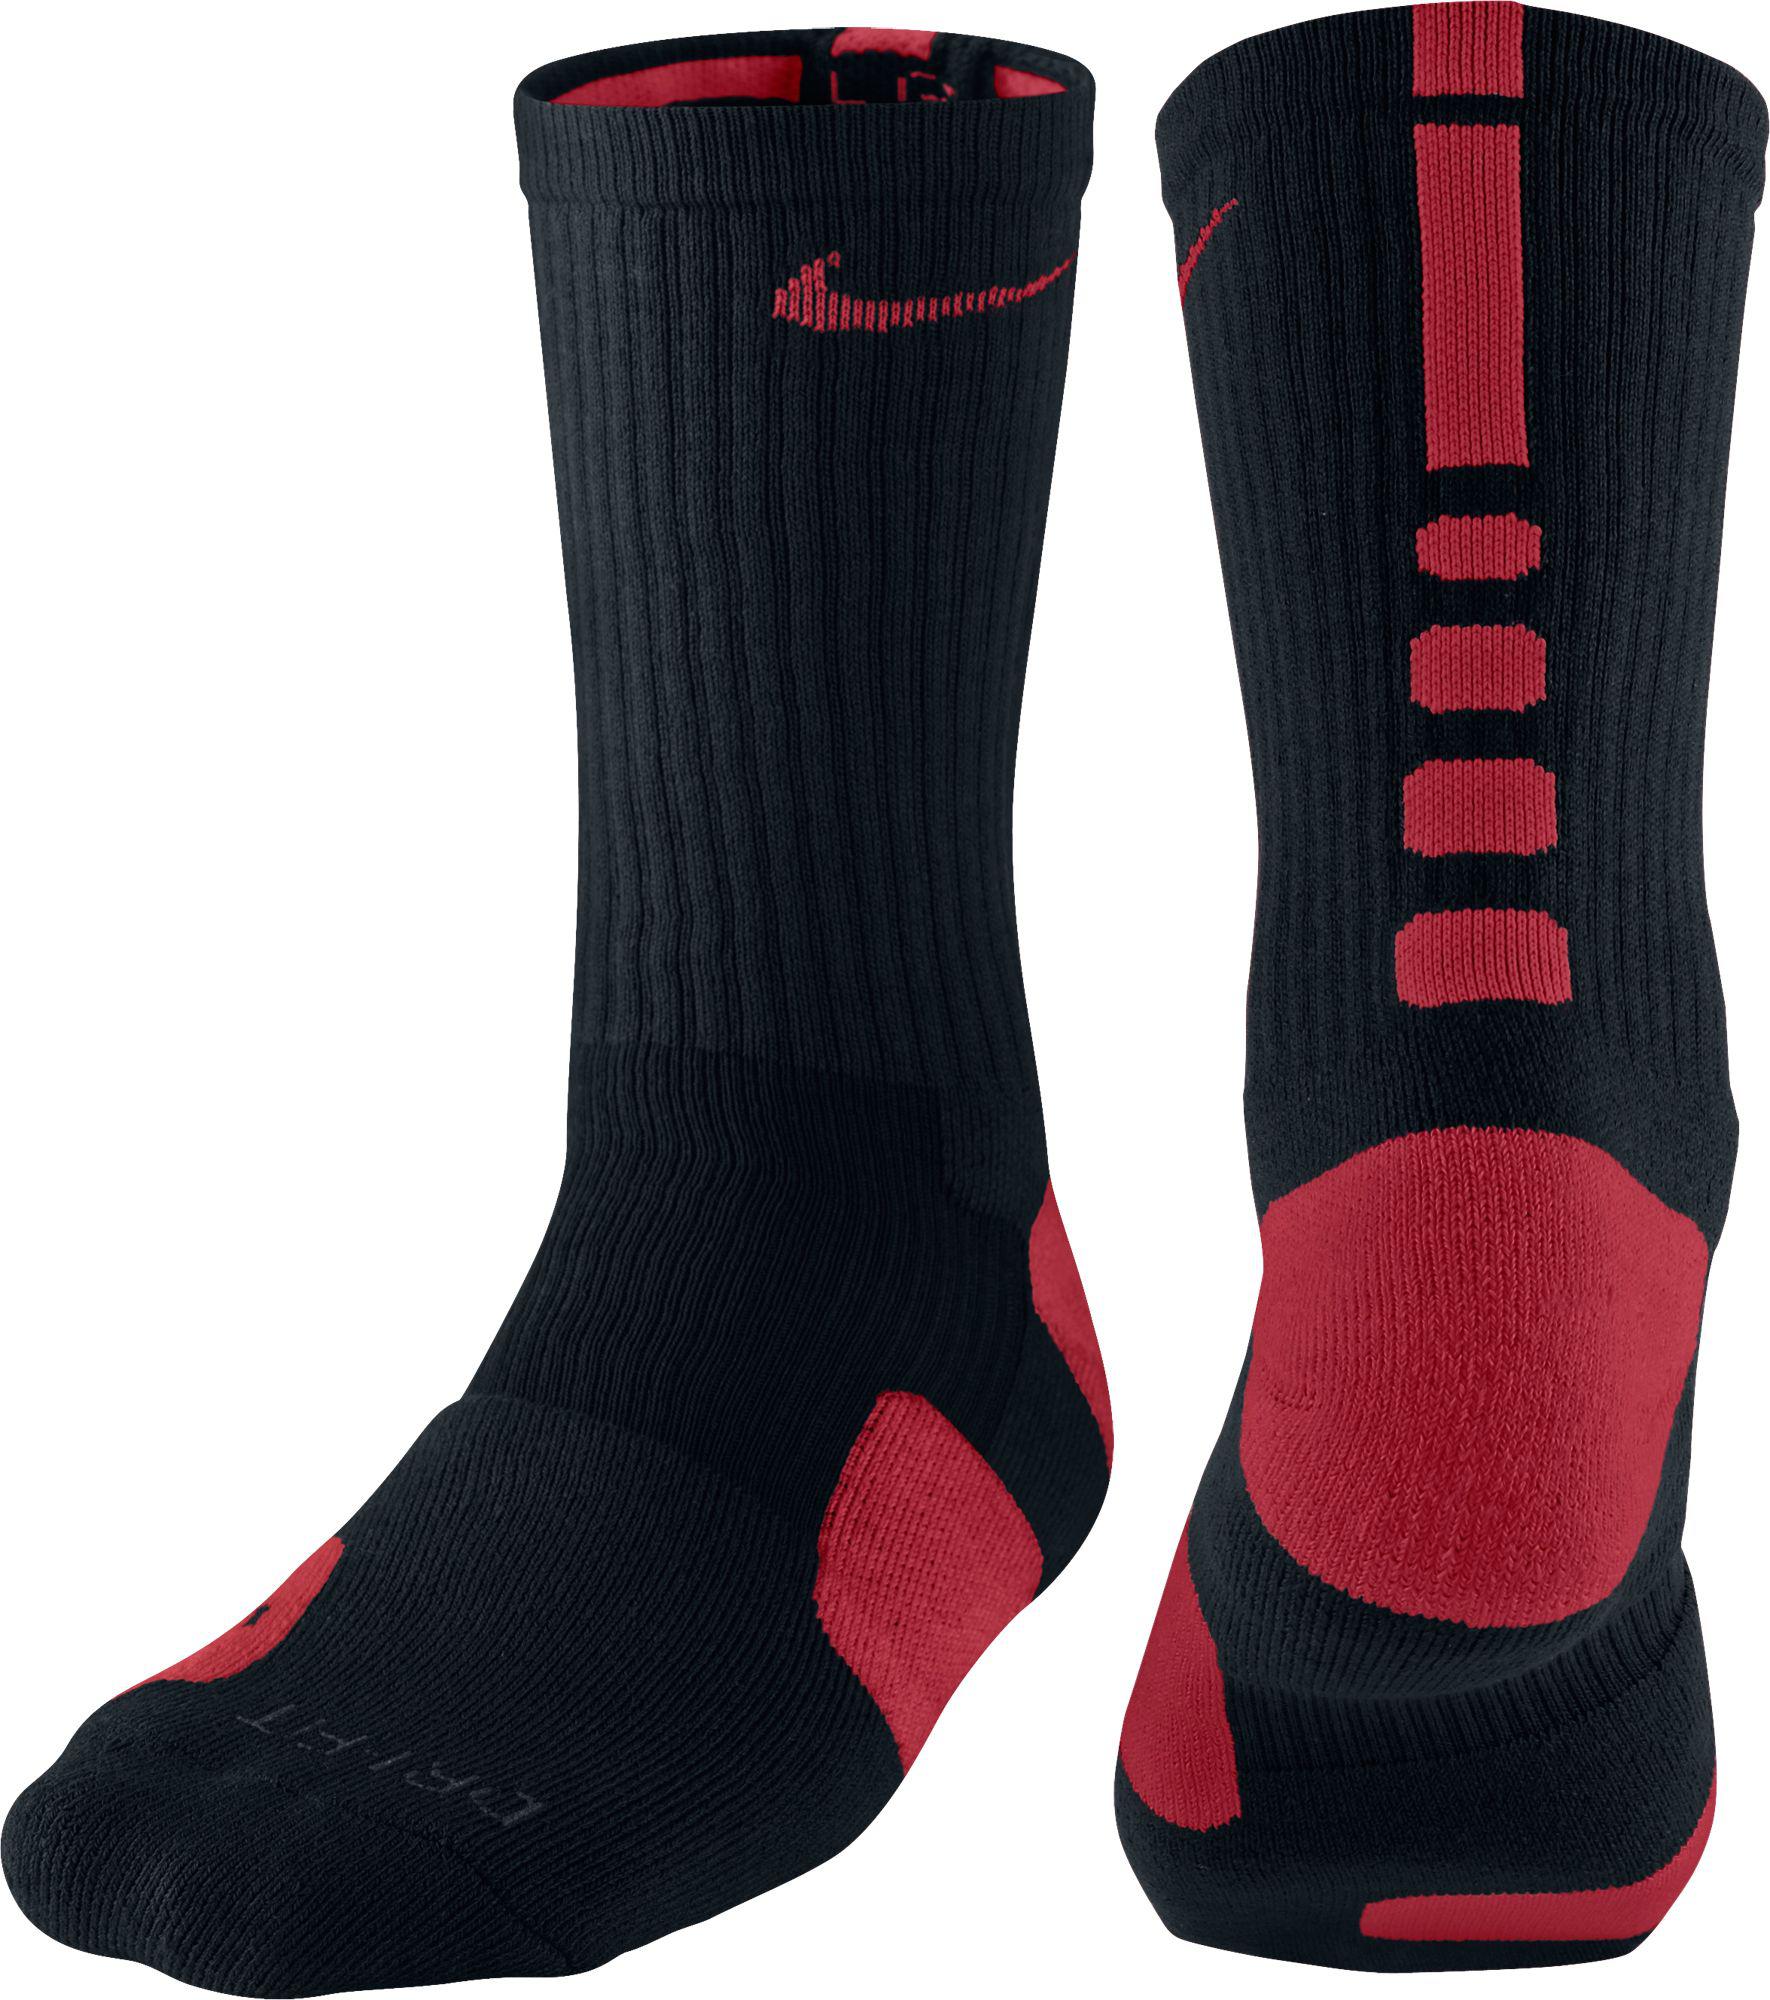 Nike Synthetic Dri-fit Elite 1.0 Crew Basketball Socks in Black/Red (Black)  for Men - Lyst